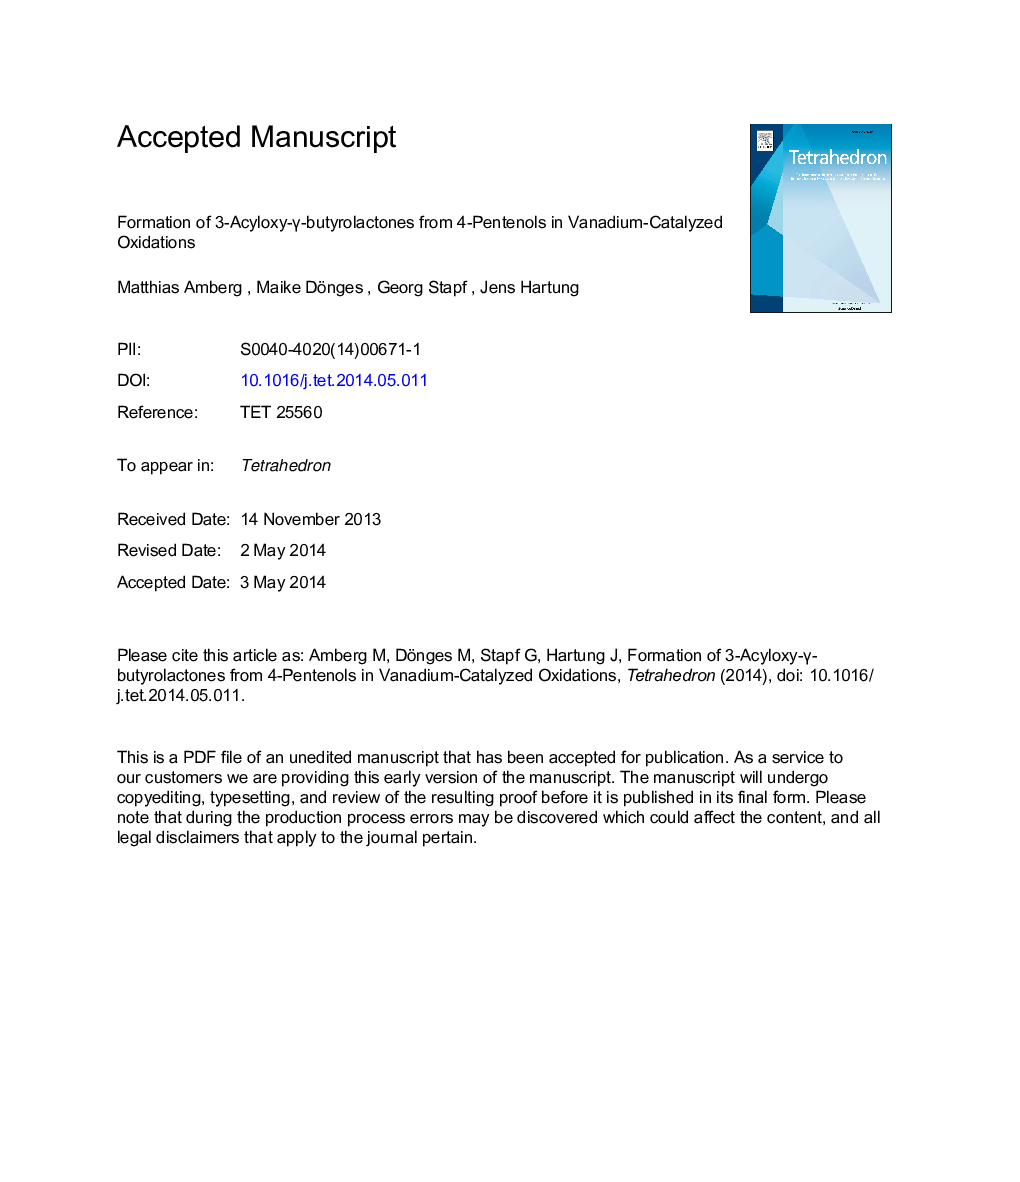 Formation of 3-acyloxy-Î³-butyrolactones from 4-pentenols in vanadium-catalyzed oxidations